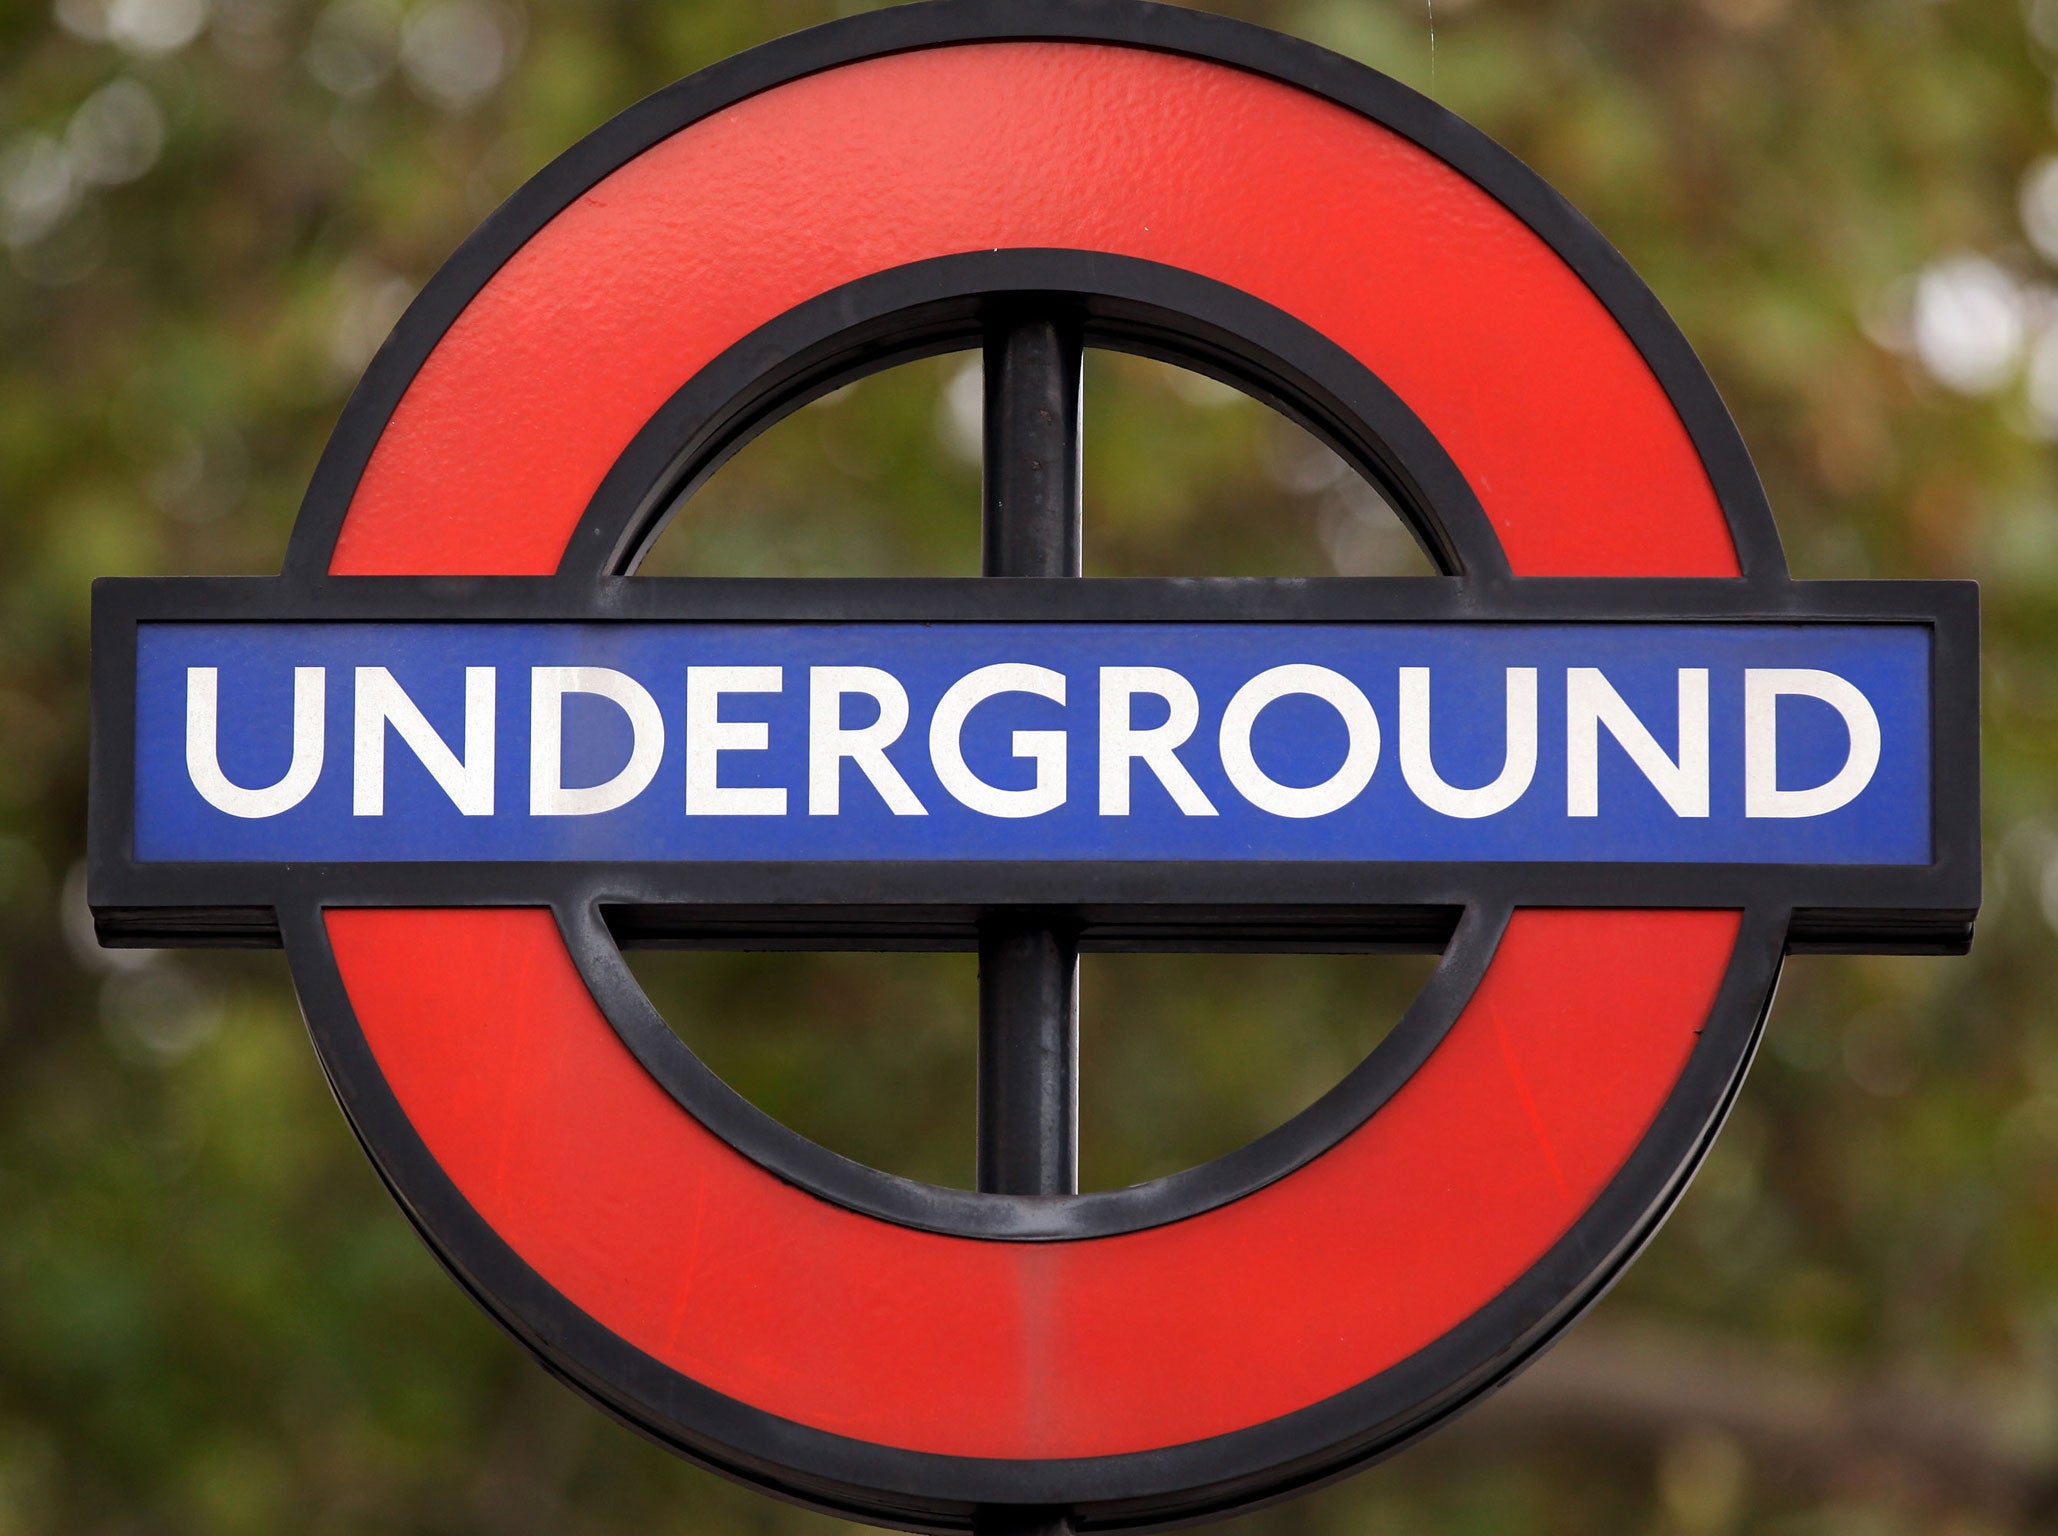 The London Underground roundel